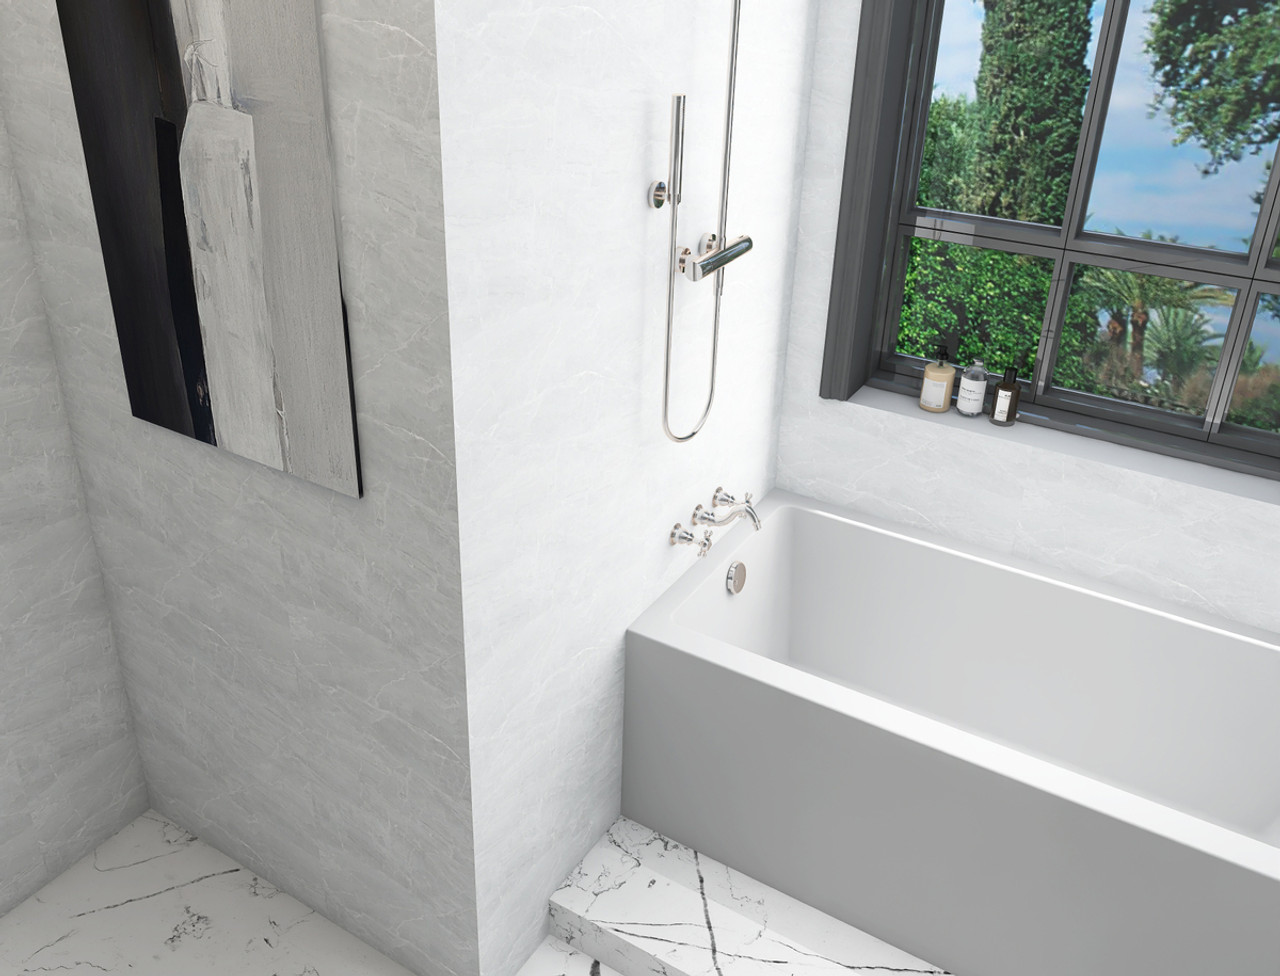 Elegant Kitchen and Bath BT201-L3060GW Alcove soaking bathtub 30x60 inch left drain in glossy white